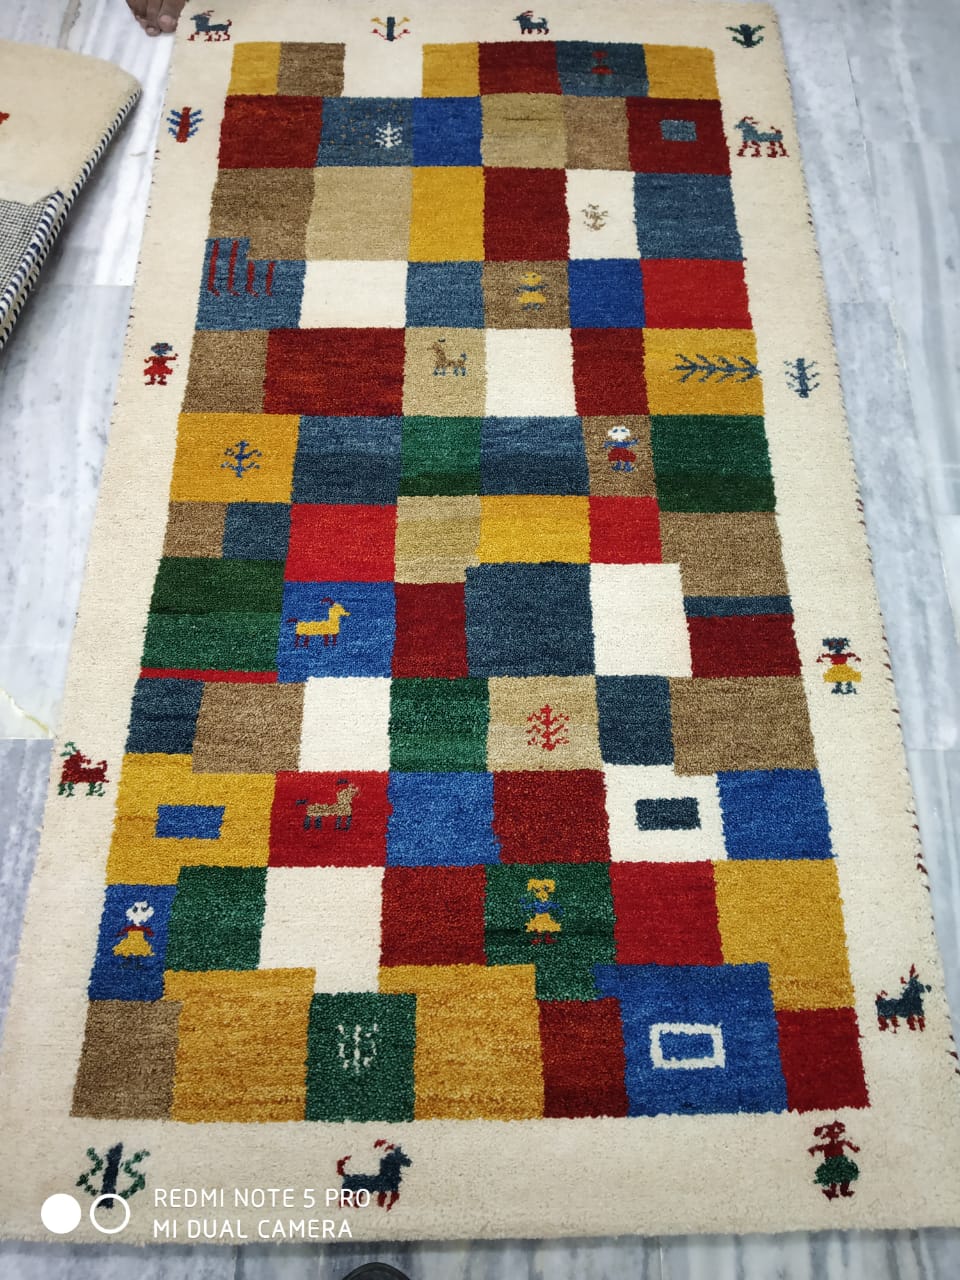 Gabbeh rugs